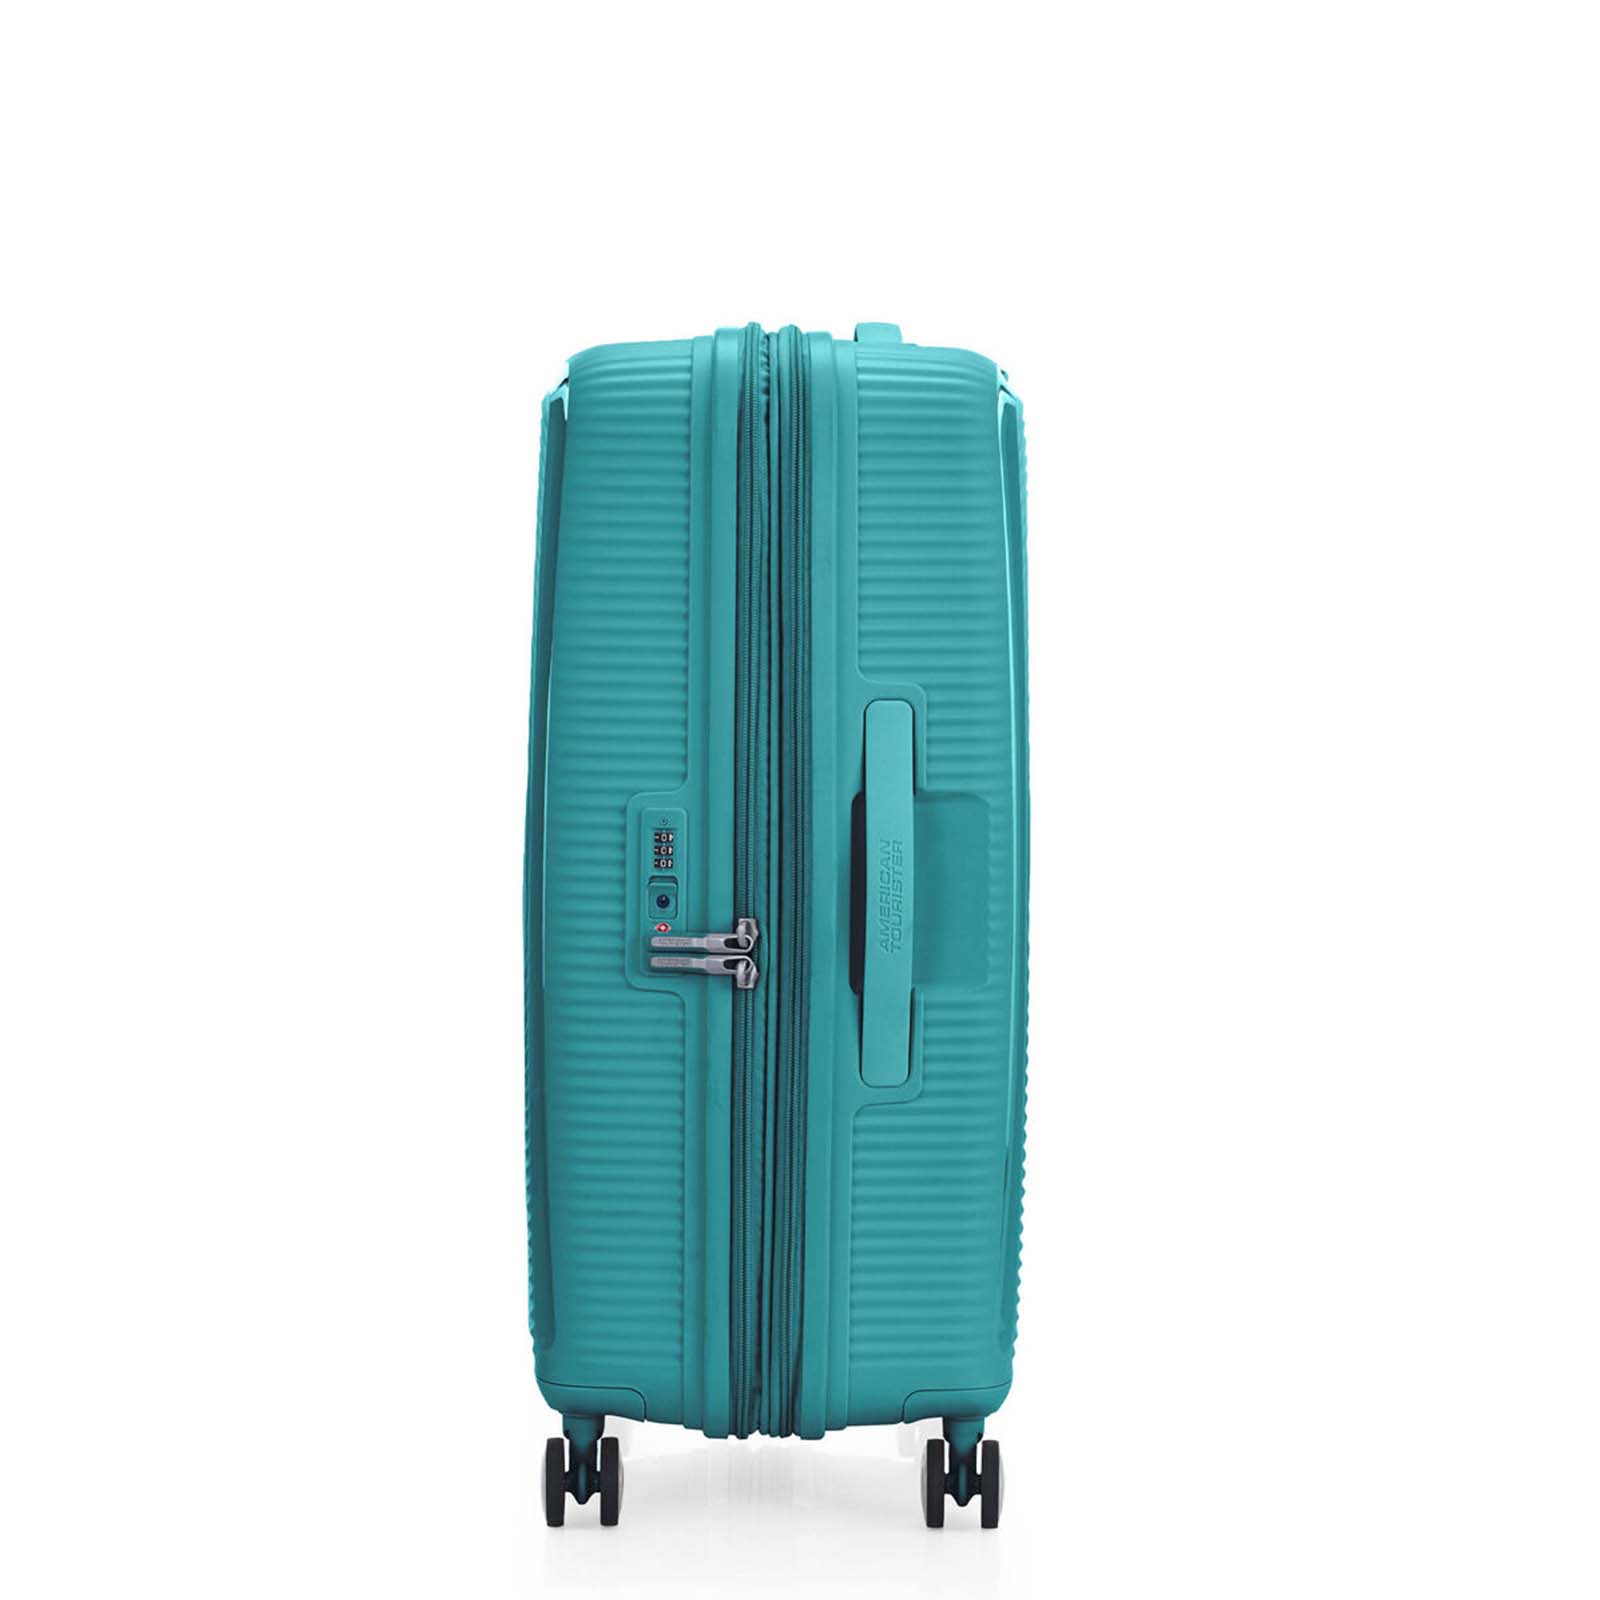 American-Tourister-Curio-2-69cm-Suitcase-Jade-Green-Lock